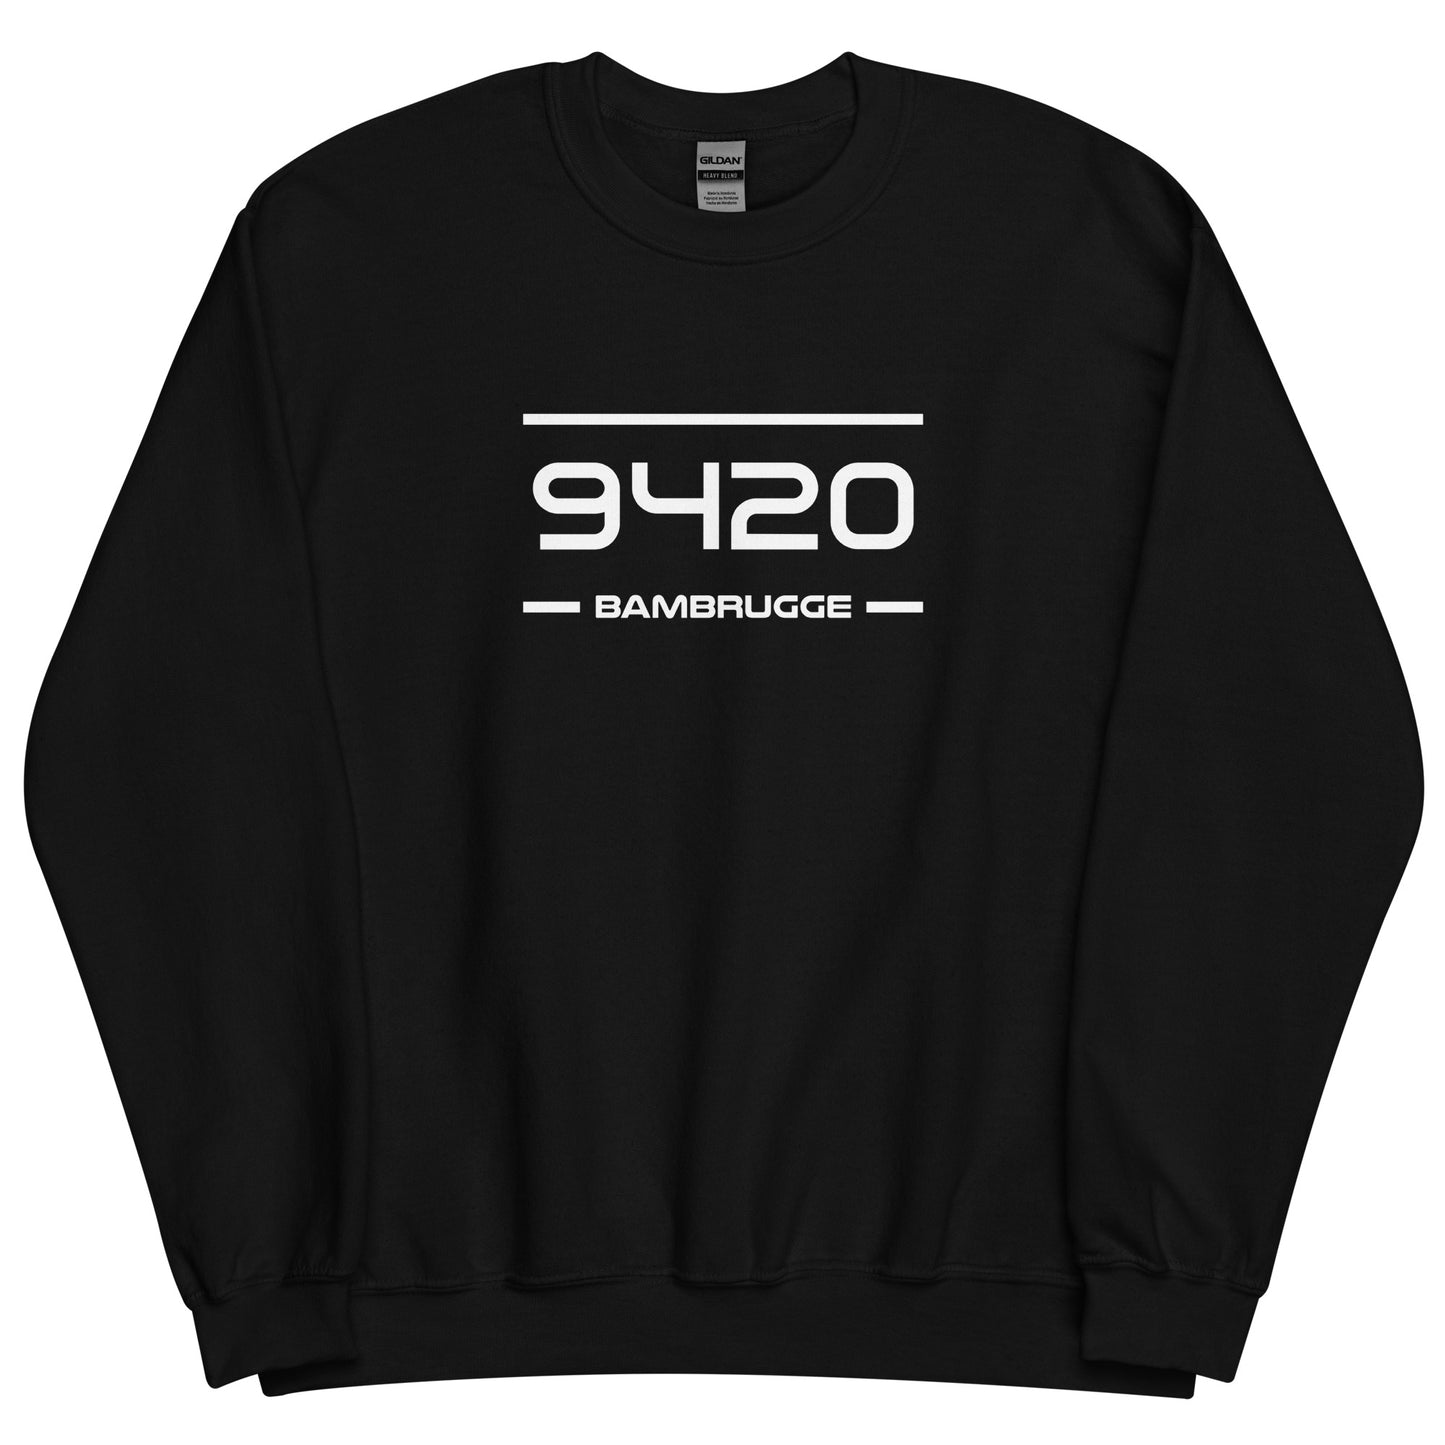 Sweater - 9420 - Bambrugge (M/V)